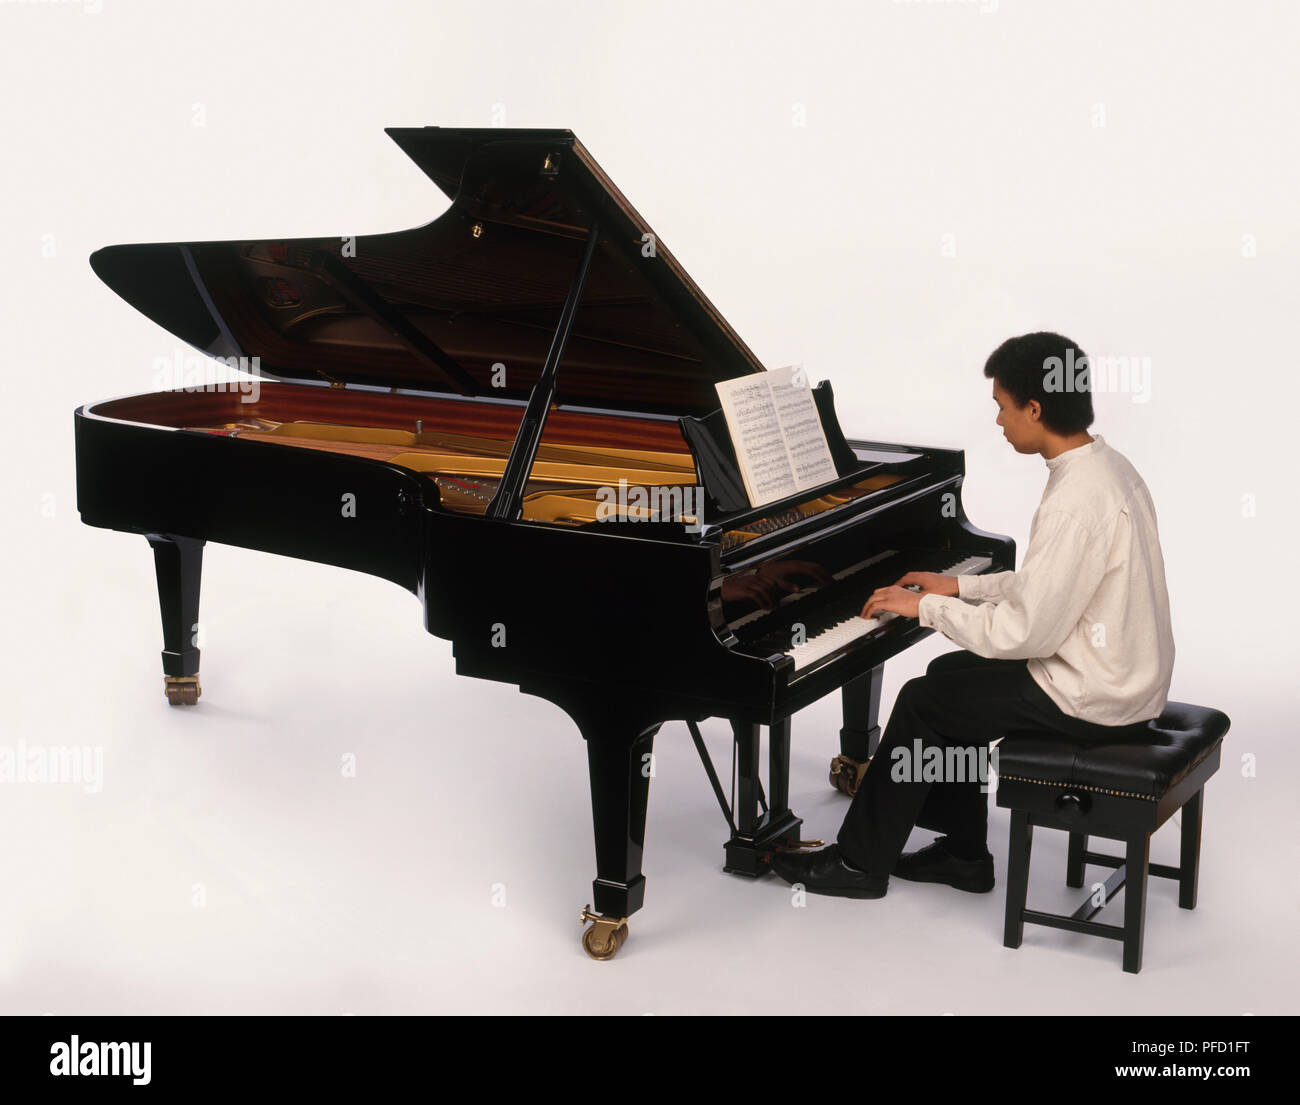 Adolescente tocando piano, lectura de partituras, vista lateral Foto de stock